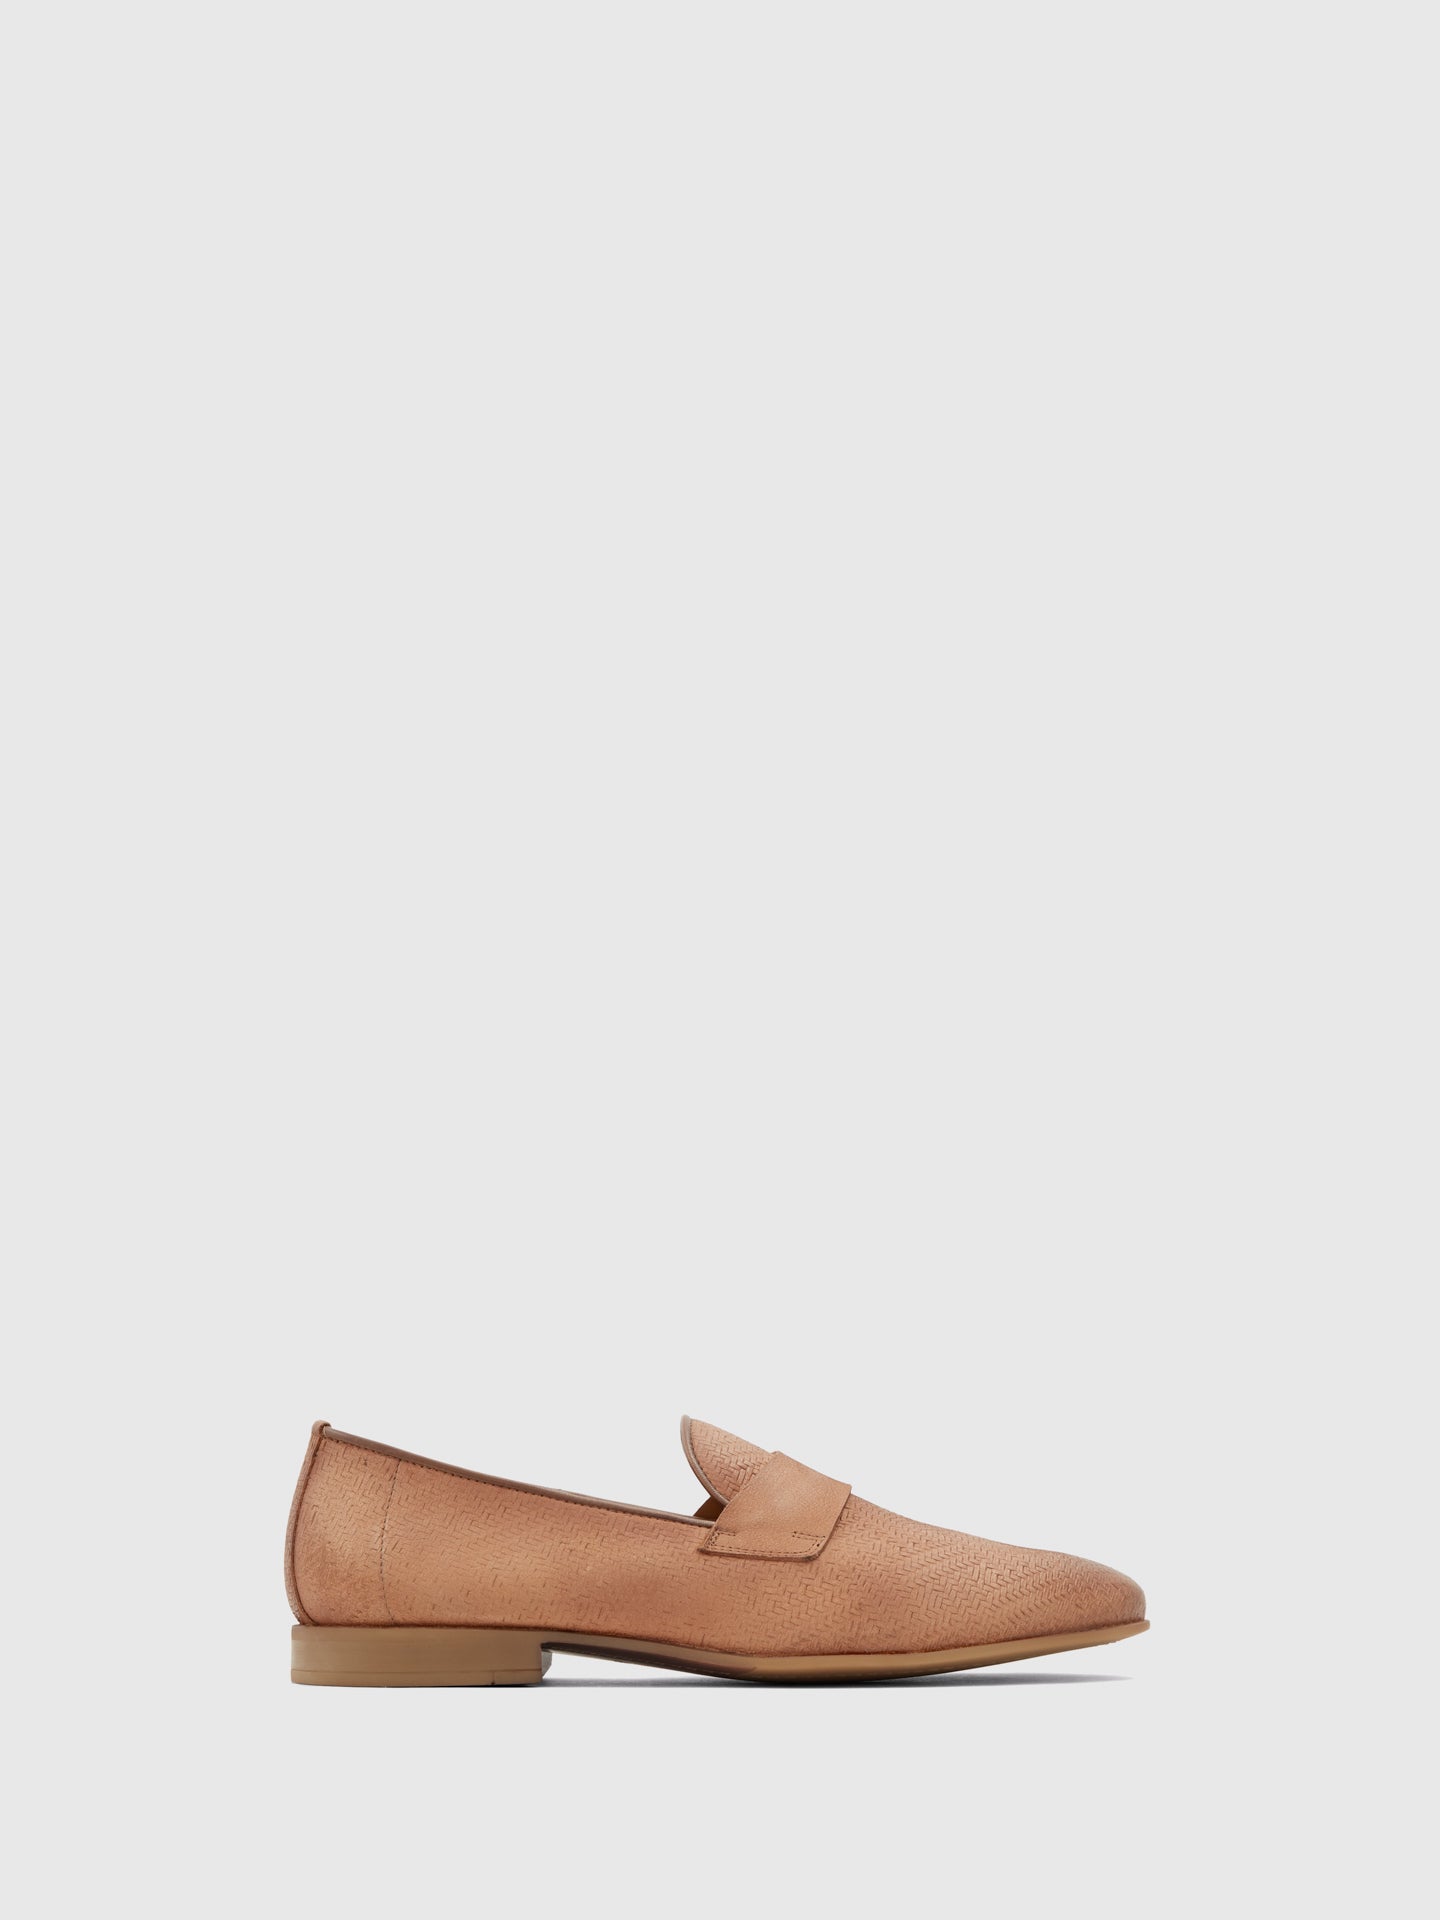 Aldo Camel Loafers Shoes